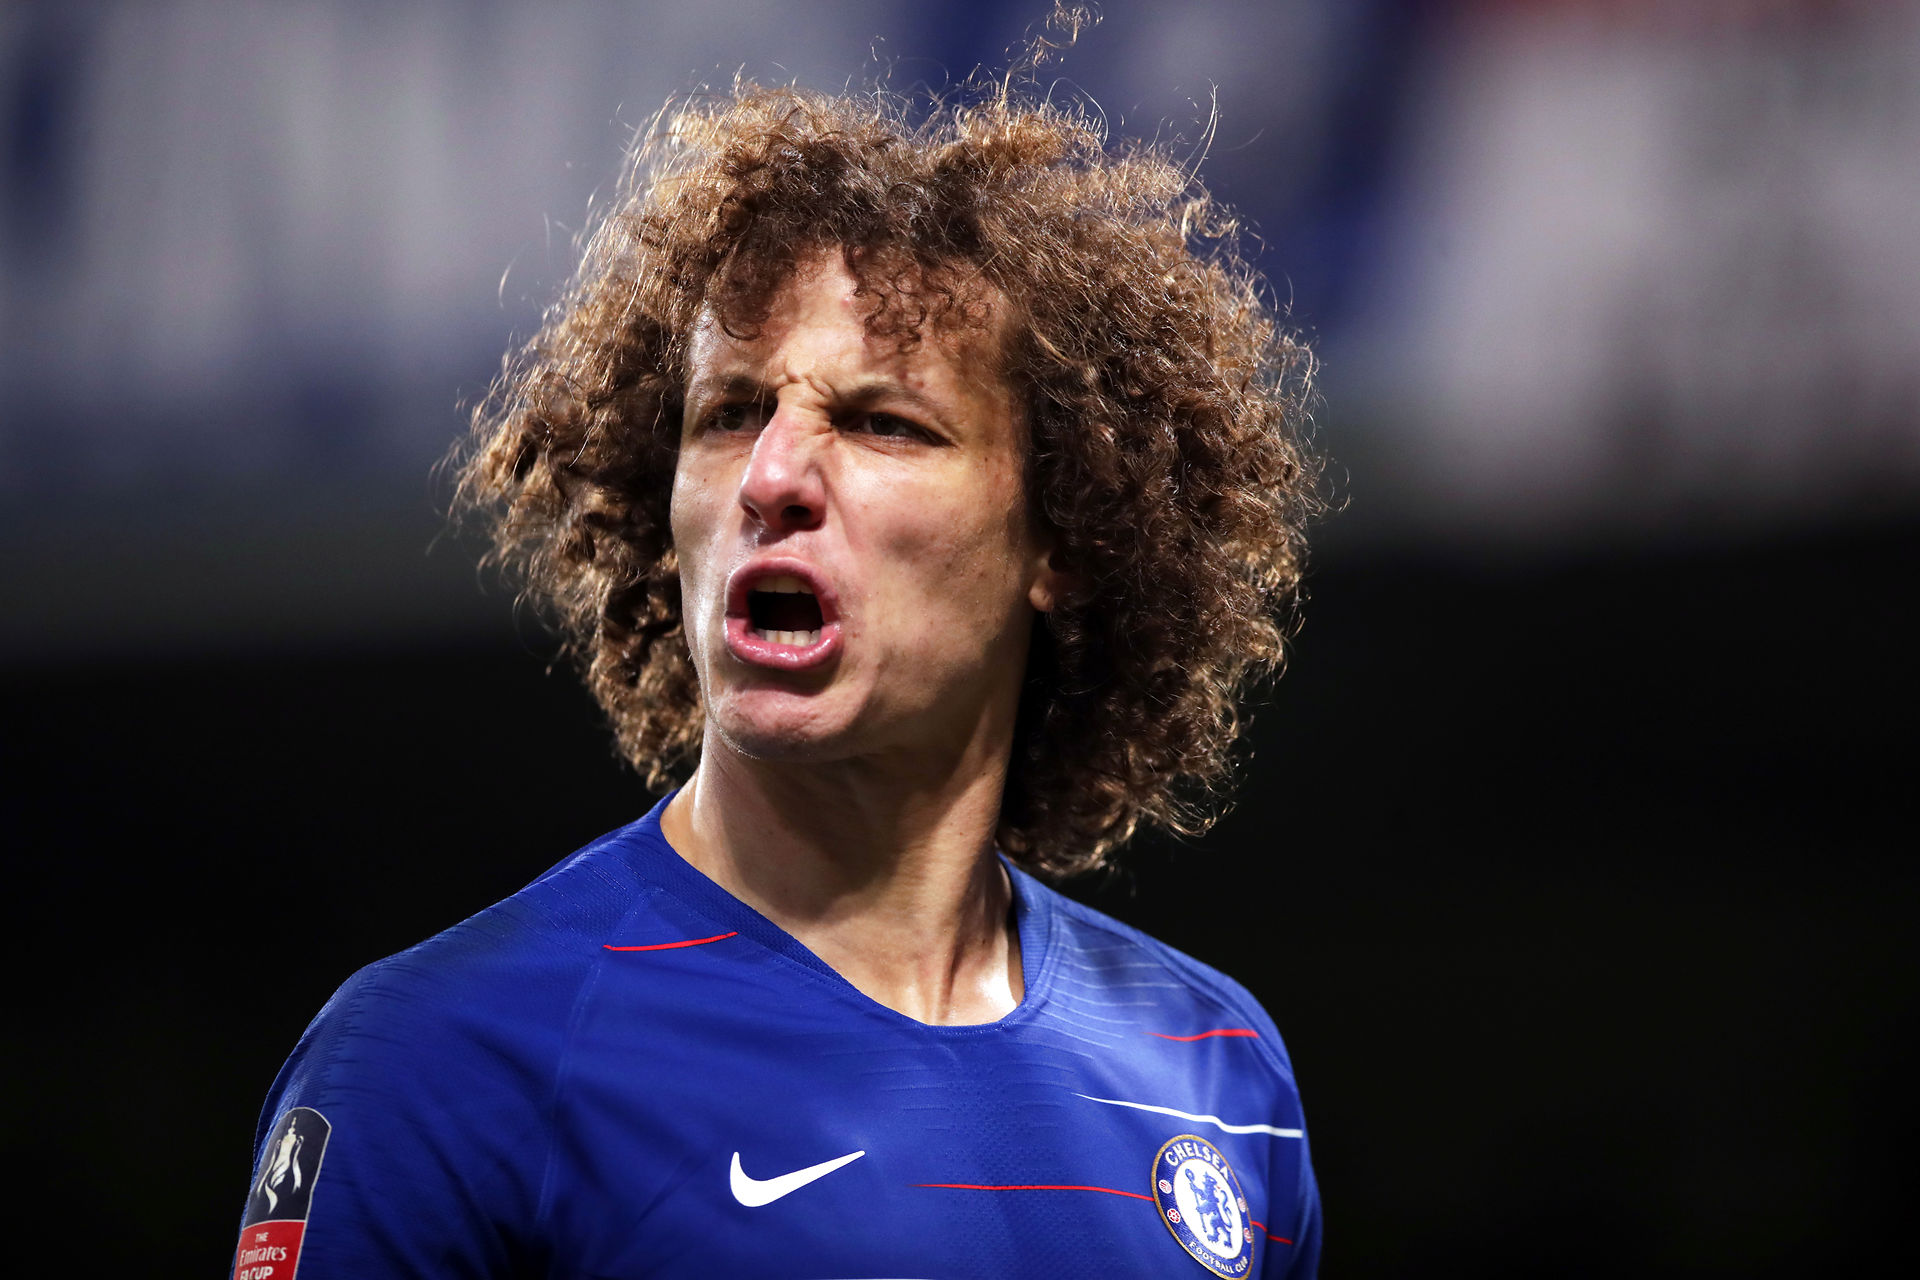  Chelsea kaos David Luiz p vej til tidligere klub Footy dk